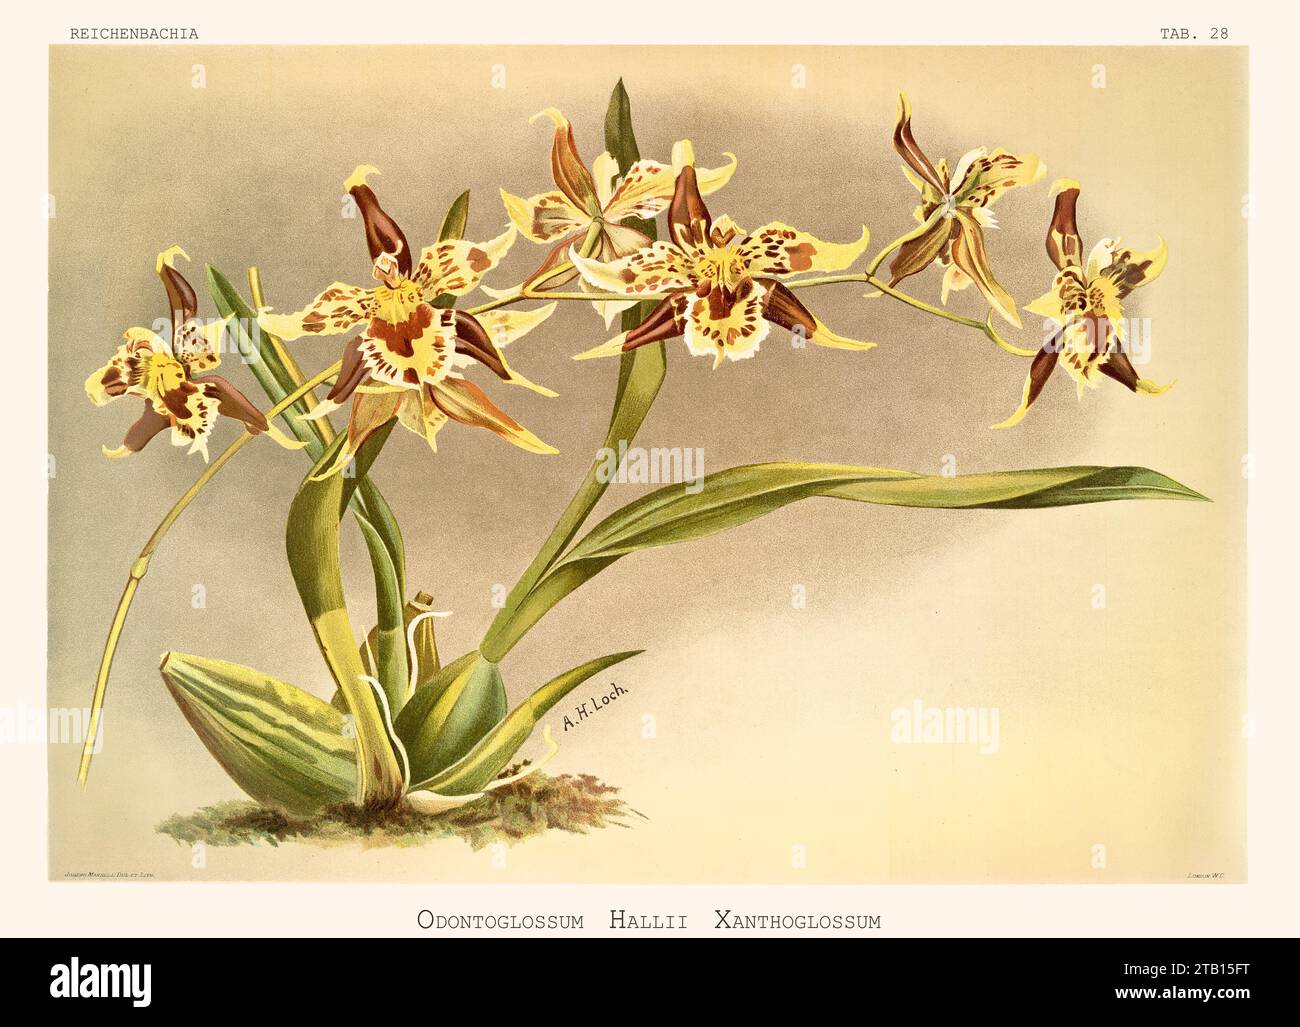 Old illustration of  Hall's Odontoglossum (Odontoglossum hallii). Reichenbachia, by F. Sander. St. Albans, UK, 1888 - 1894 Stock Photo